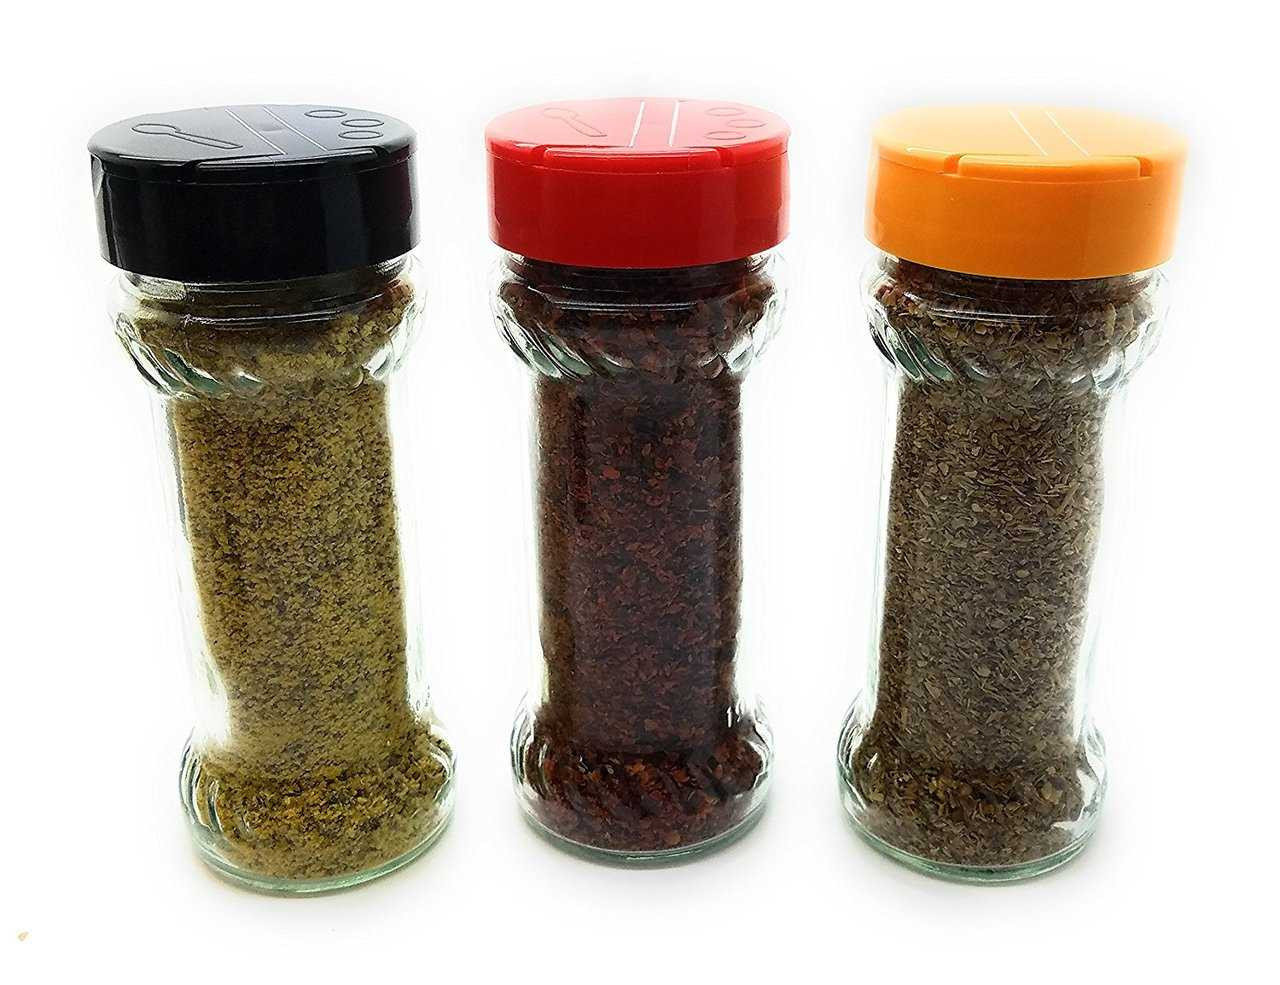 Airtight 4oz Glass Spice Jar – The Cook's Nook